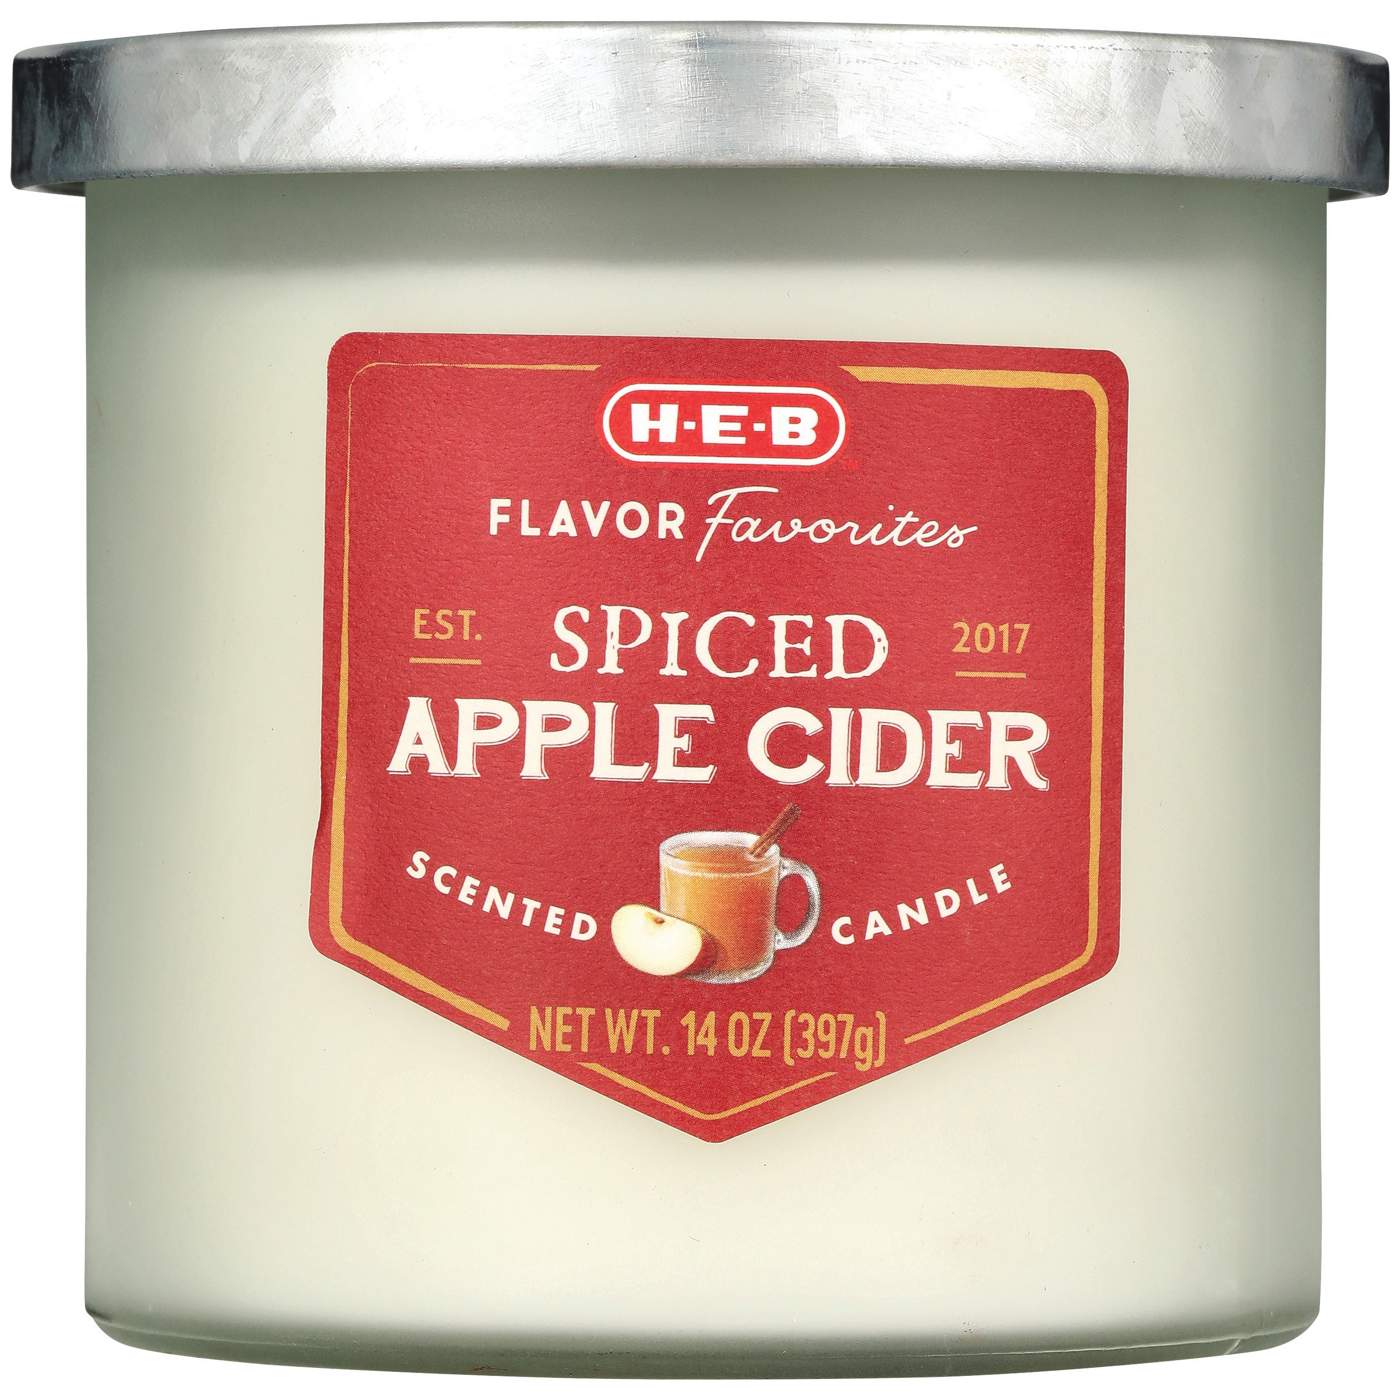 H-E-B Flavor Favorites Spiced Apple Cider Scented Candle; image 1 of 2